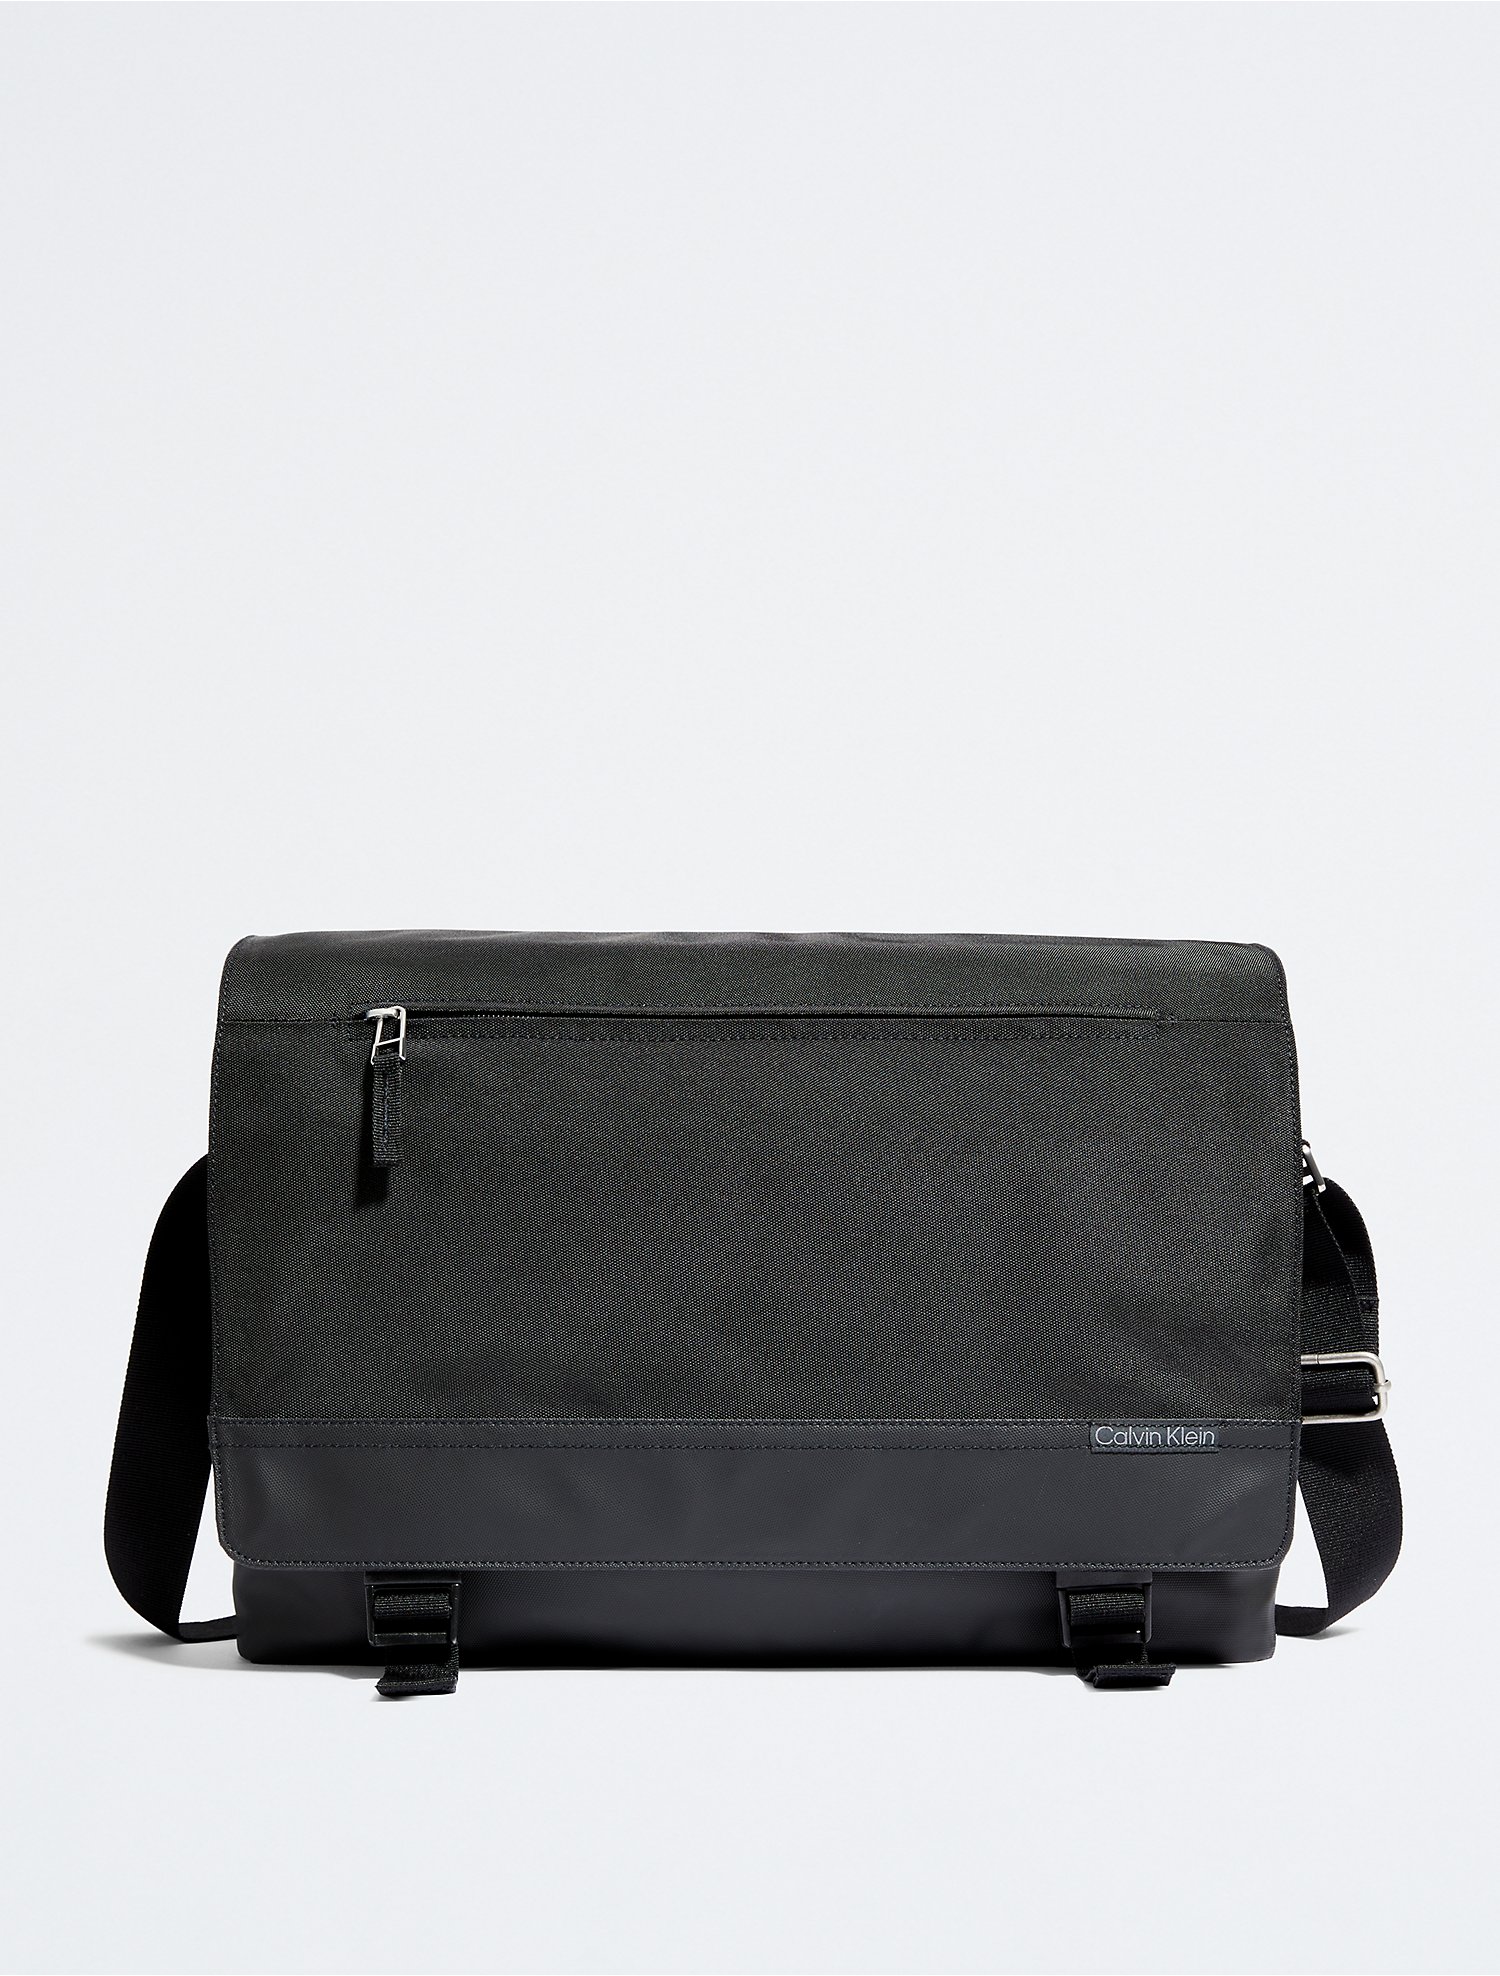 patroon revolutie Nauwgezet Utility Messenger Bag | Calvin Klein